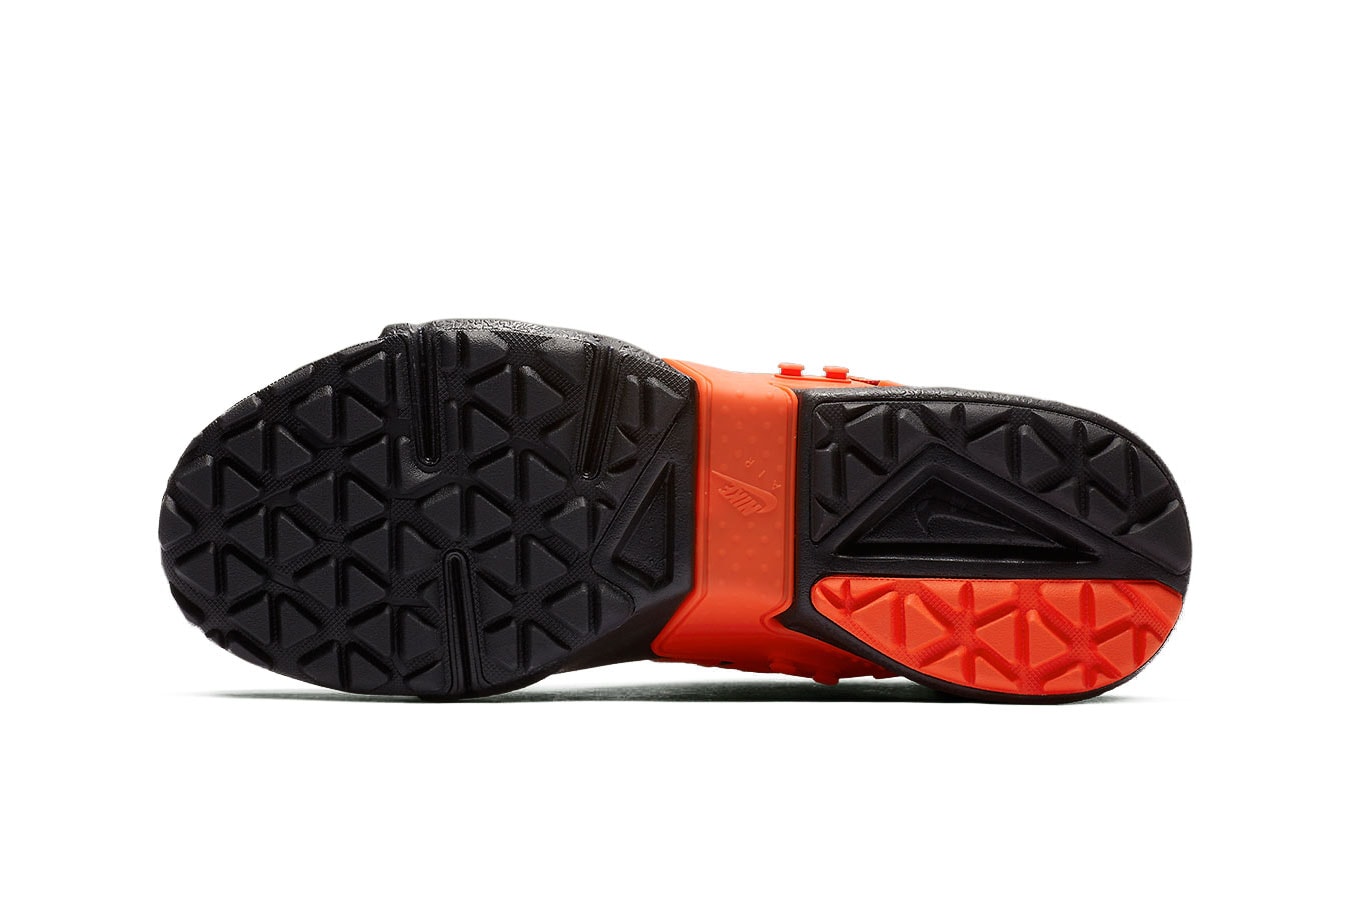 Nike air Huarache Gripp black white Team Orange Release Date sneaker price november 8 2018 AO1730-001